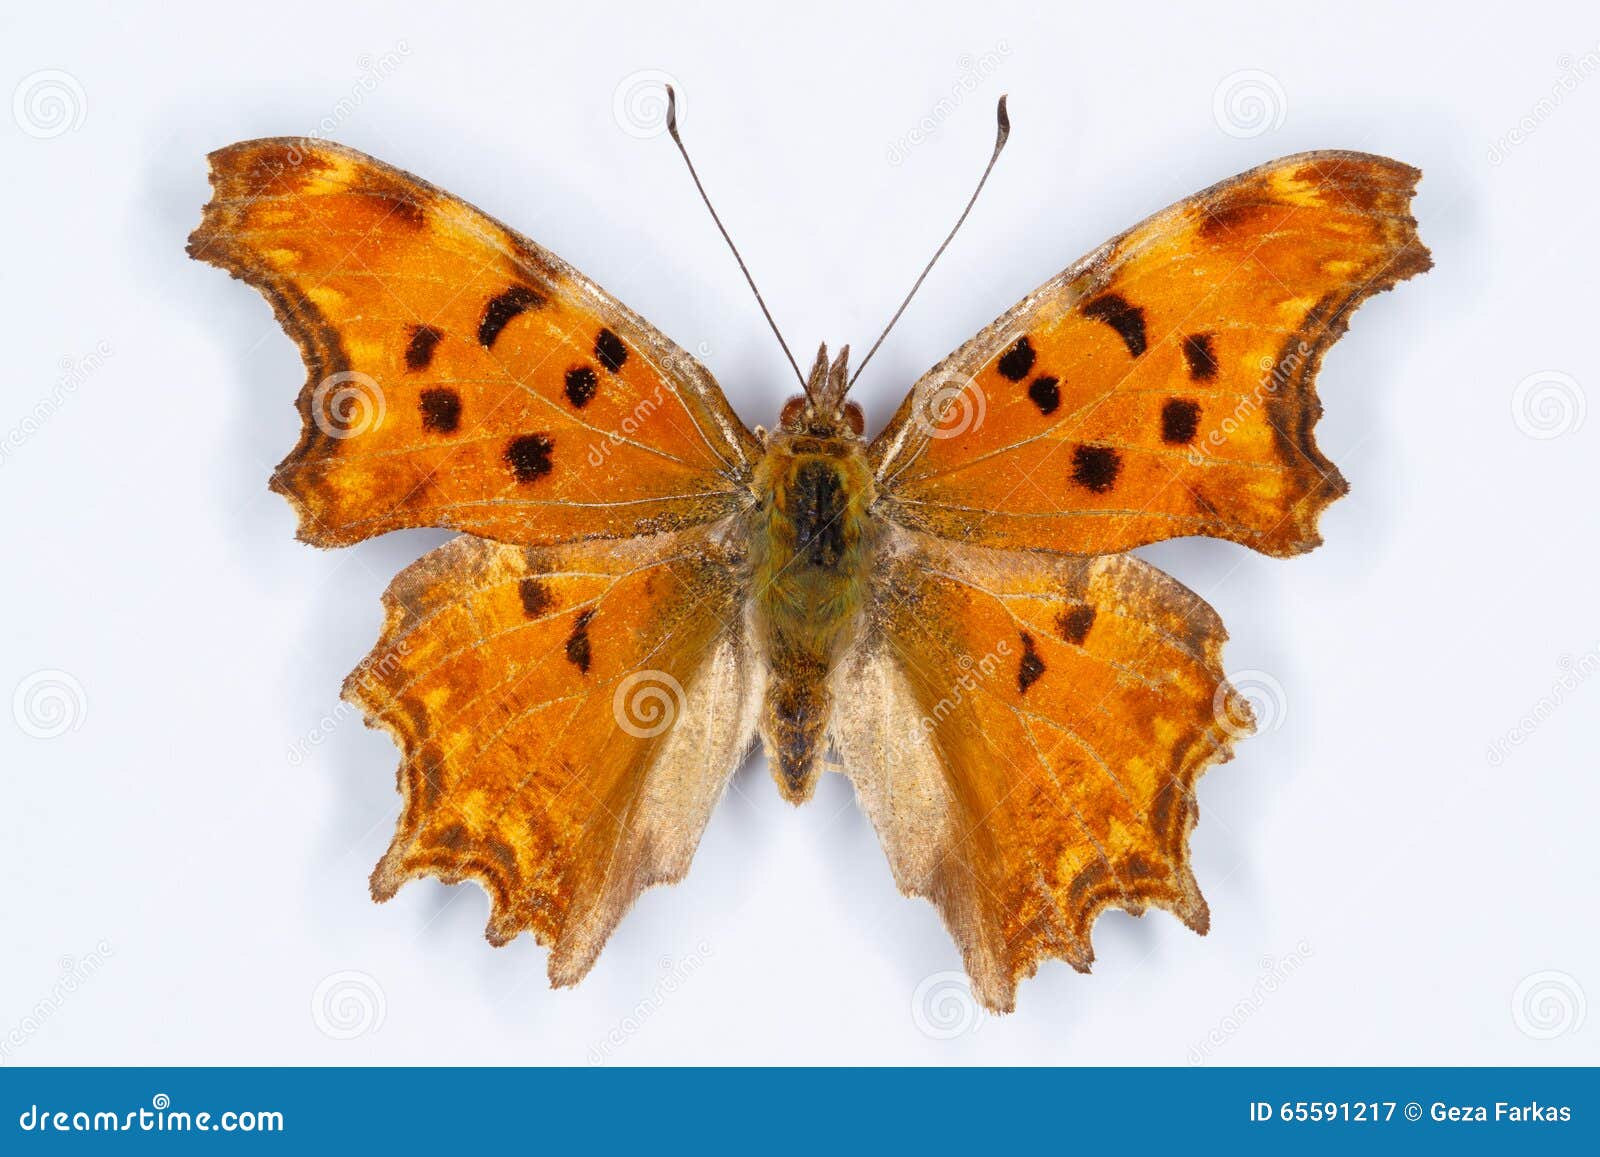 southern comma butterfly, polygonia egea